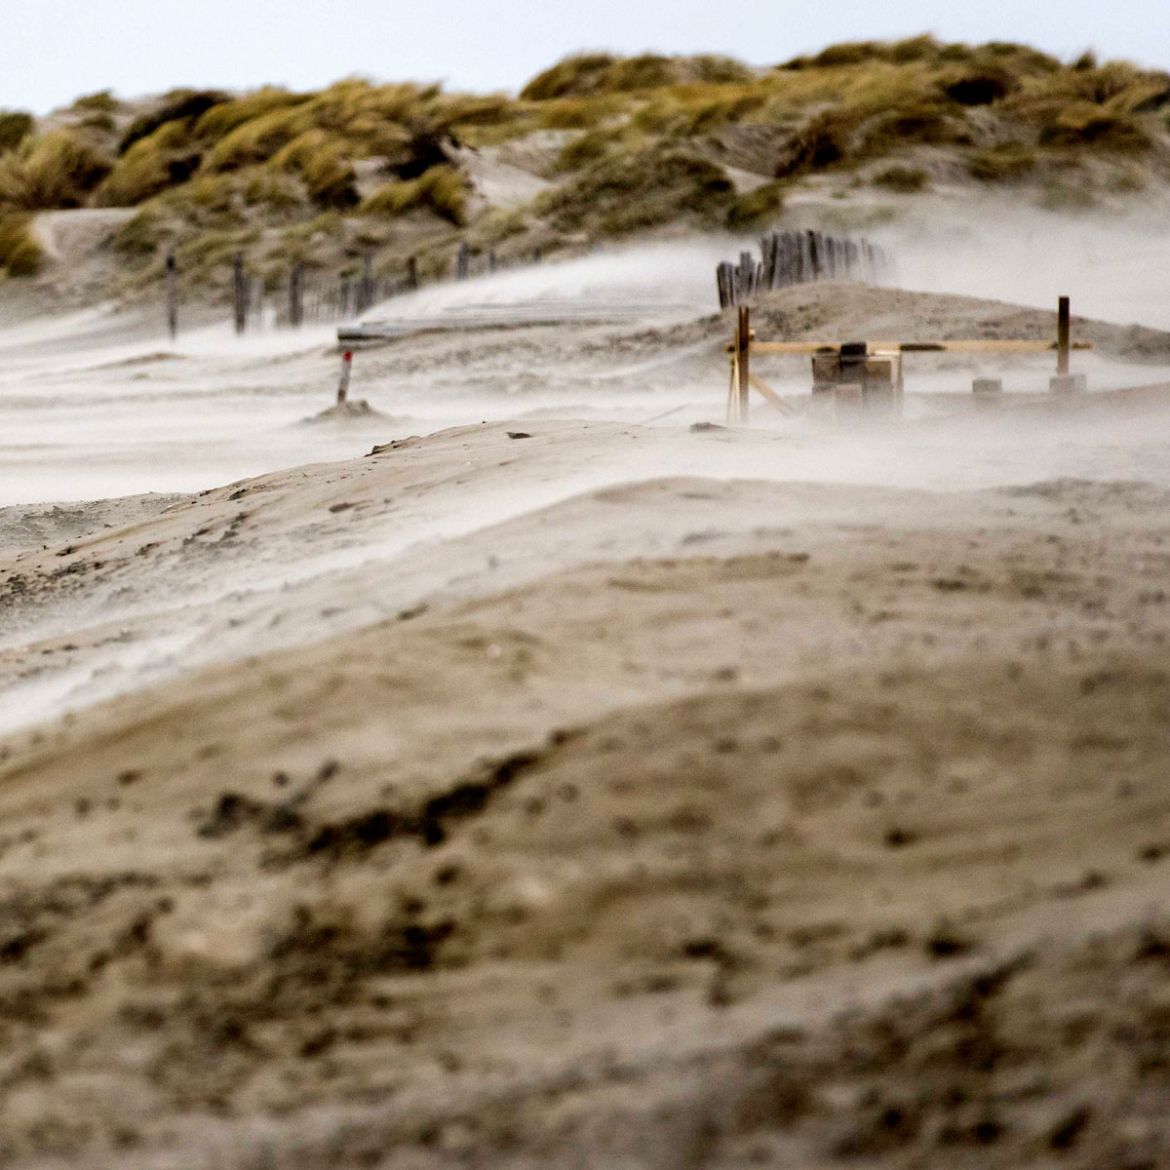 Sand blasting across the beach as Storm Doris heads for Ijmuiden, The Netherlands.